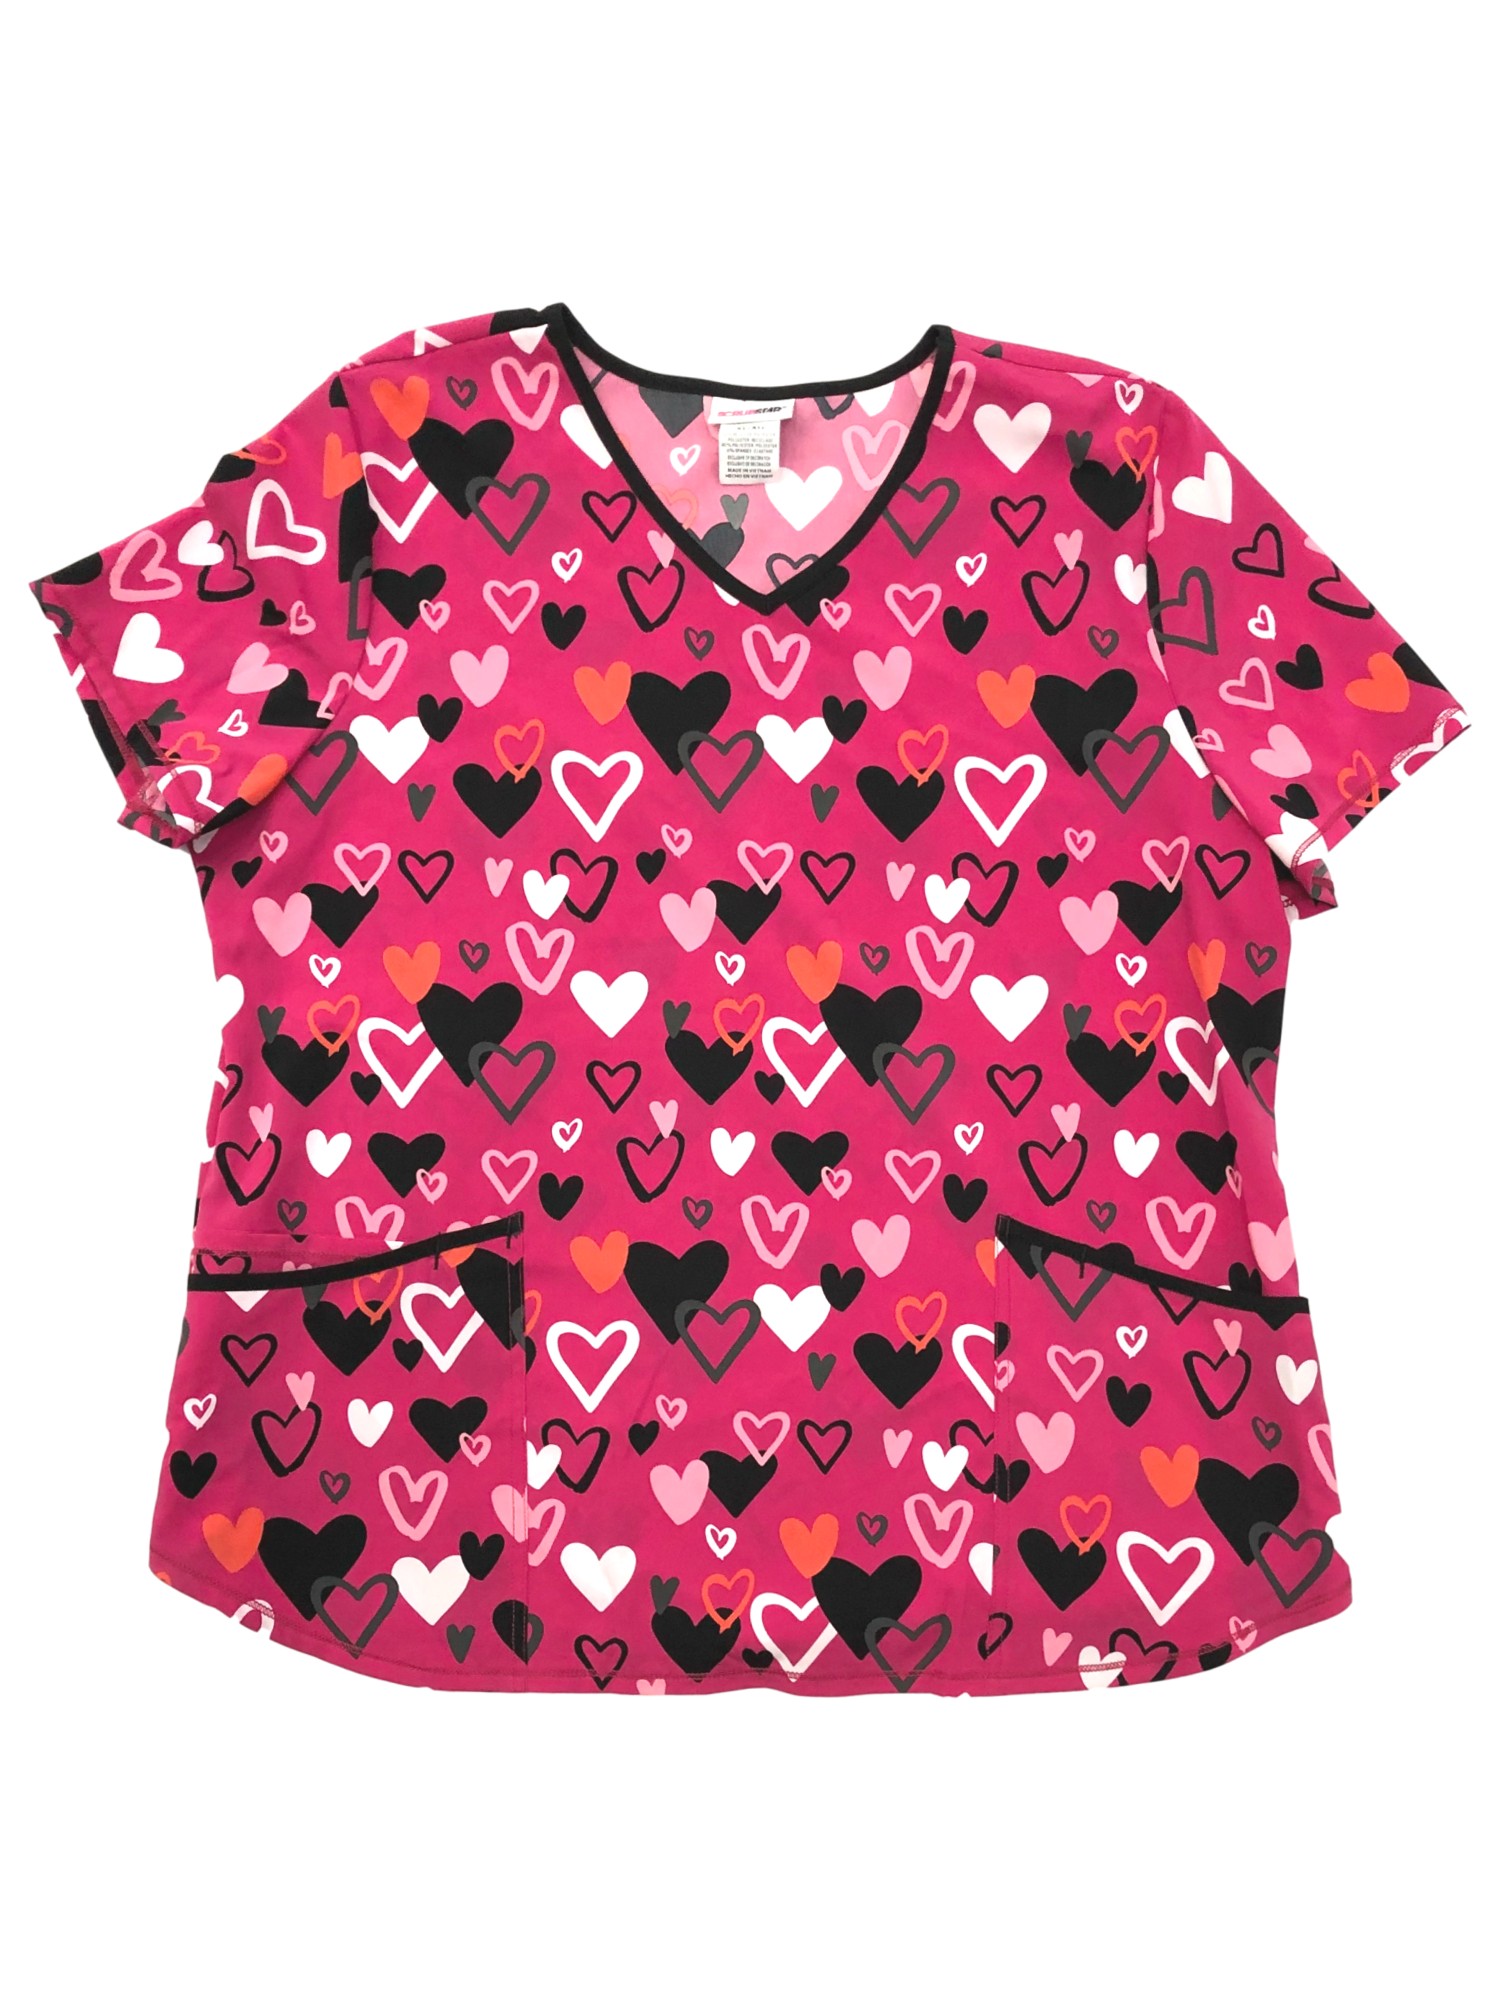 ScrubStar Womens Pink Hearts Stretch Fit Valentines Medical Scrubs Shirt Top